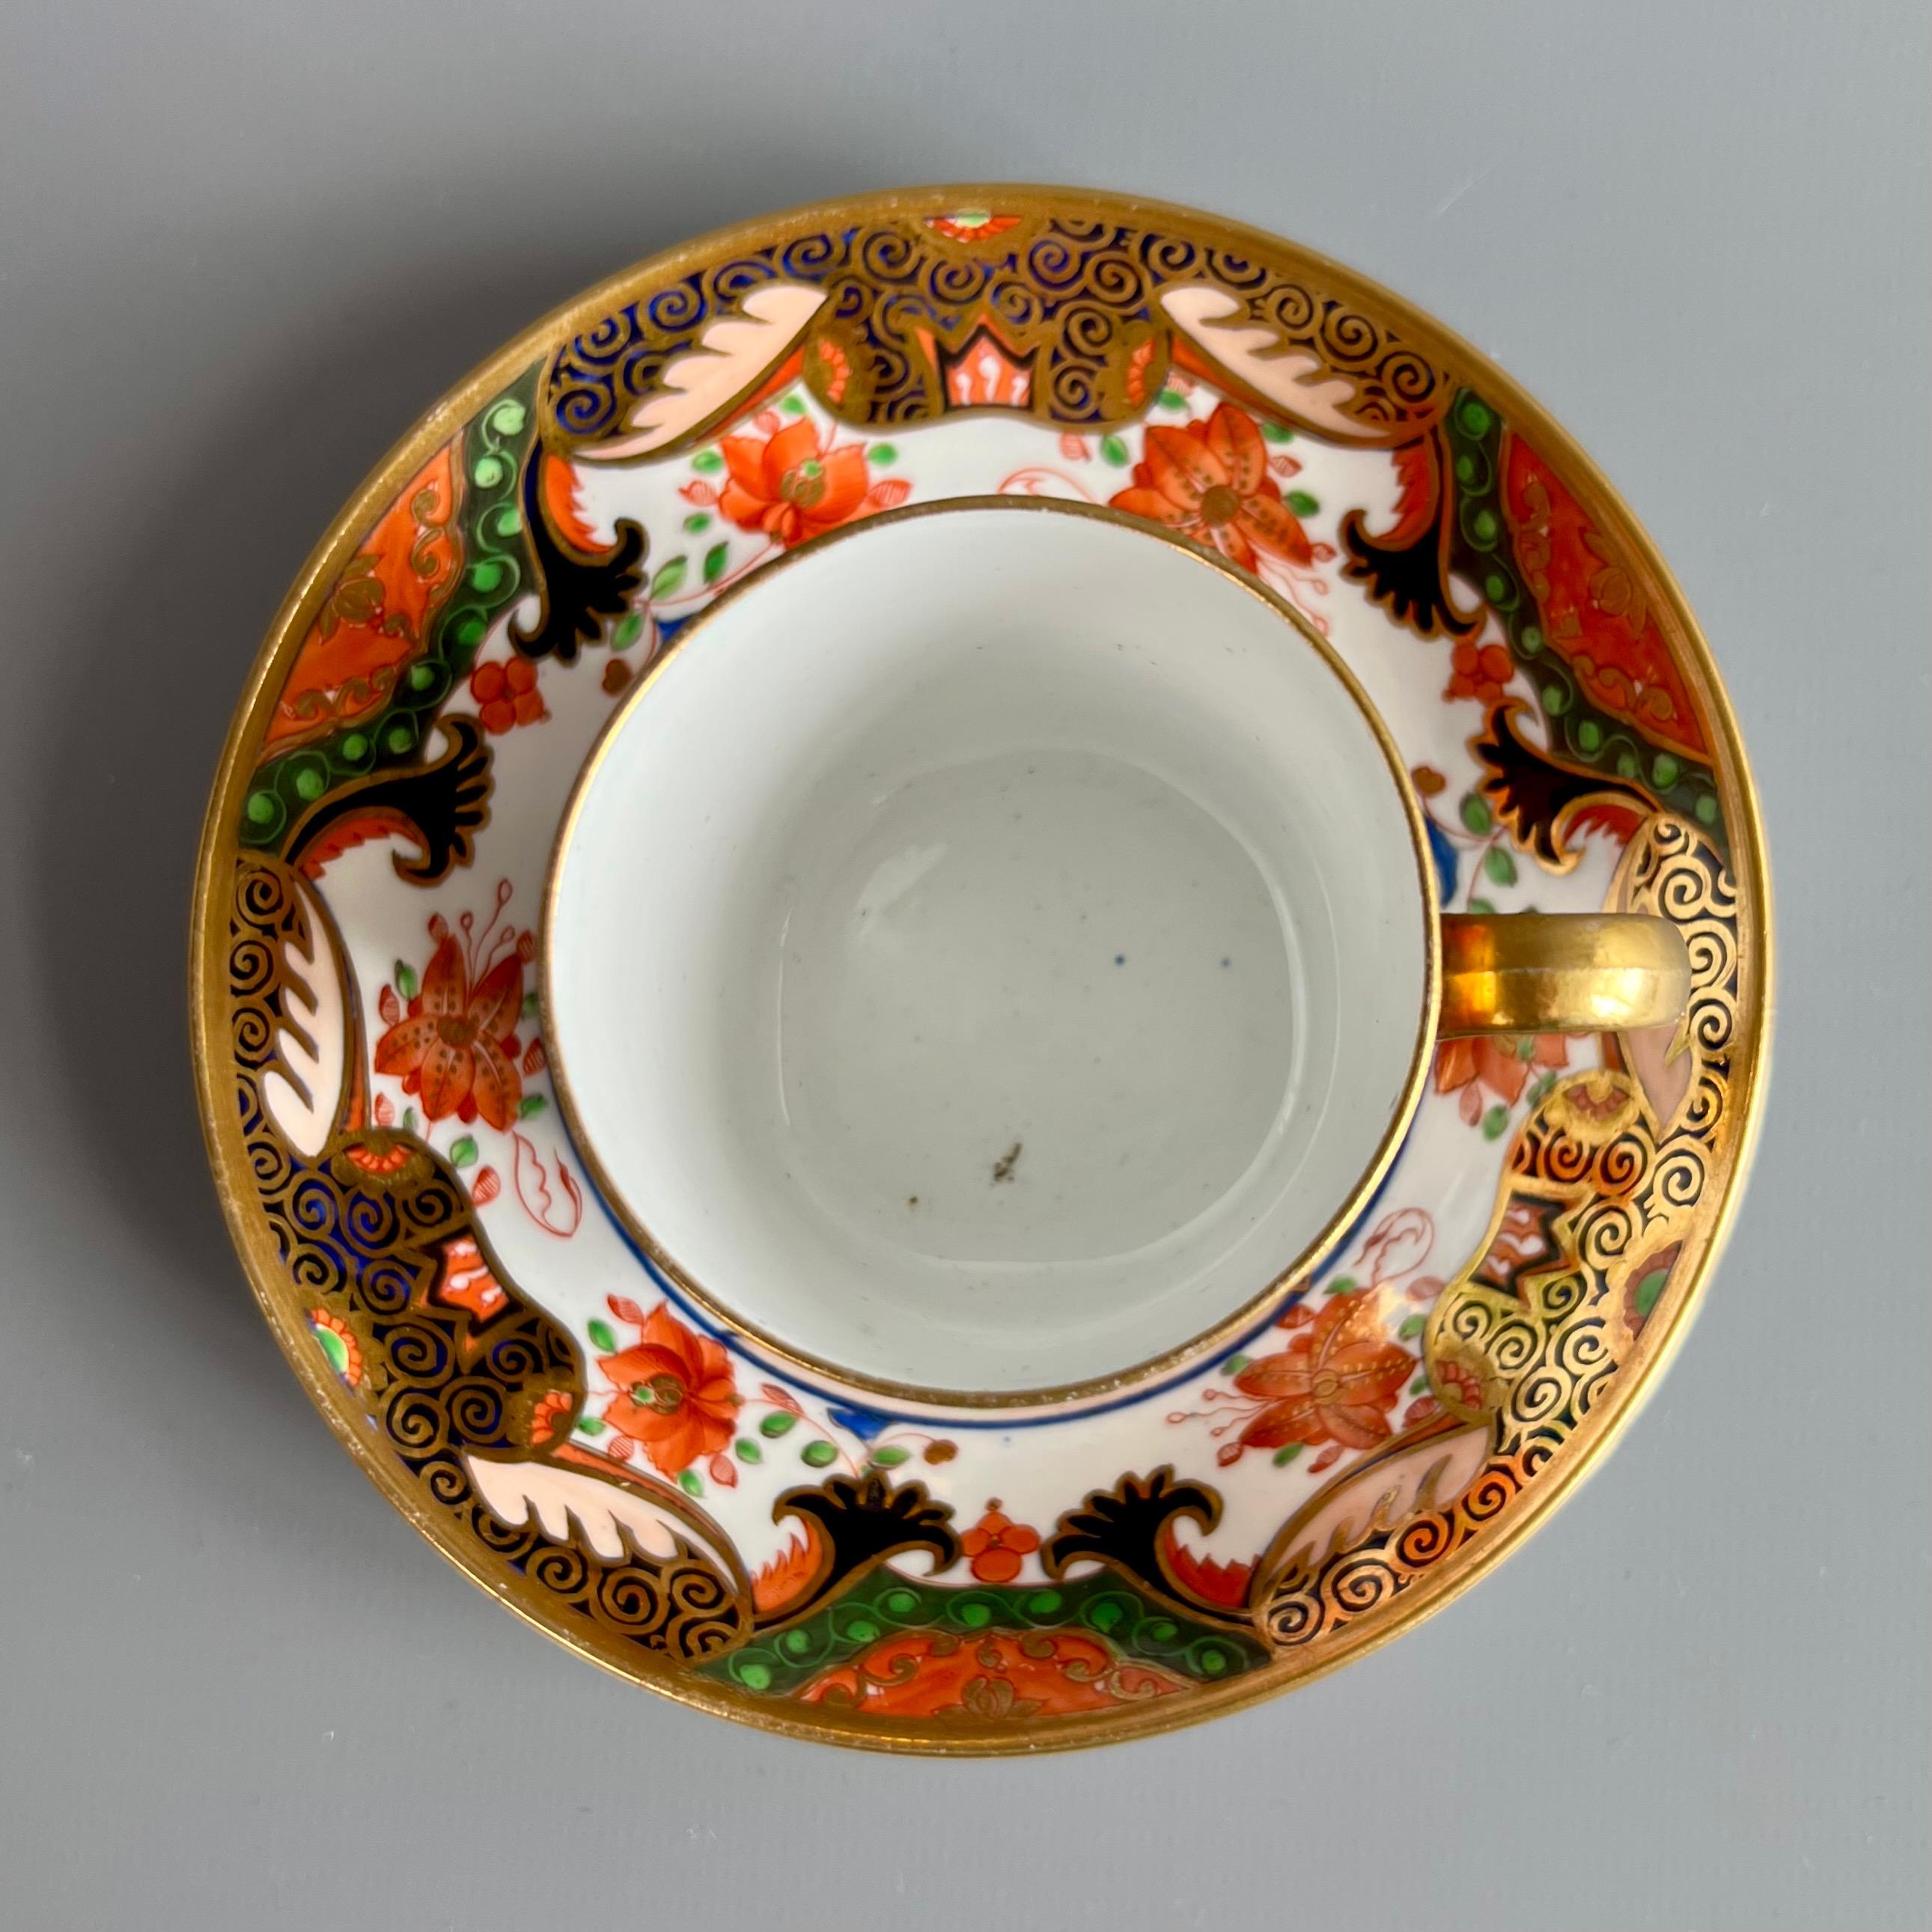 Spode Porcelain Teacup Trio, Imari Tobacco Leaf Patt. 967, Regency, circa 1810 1